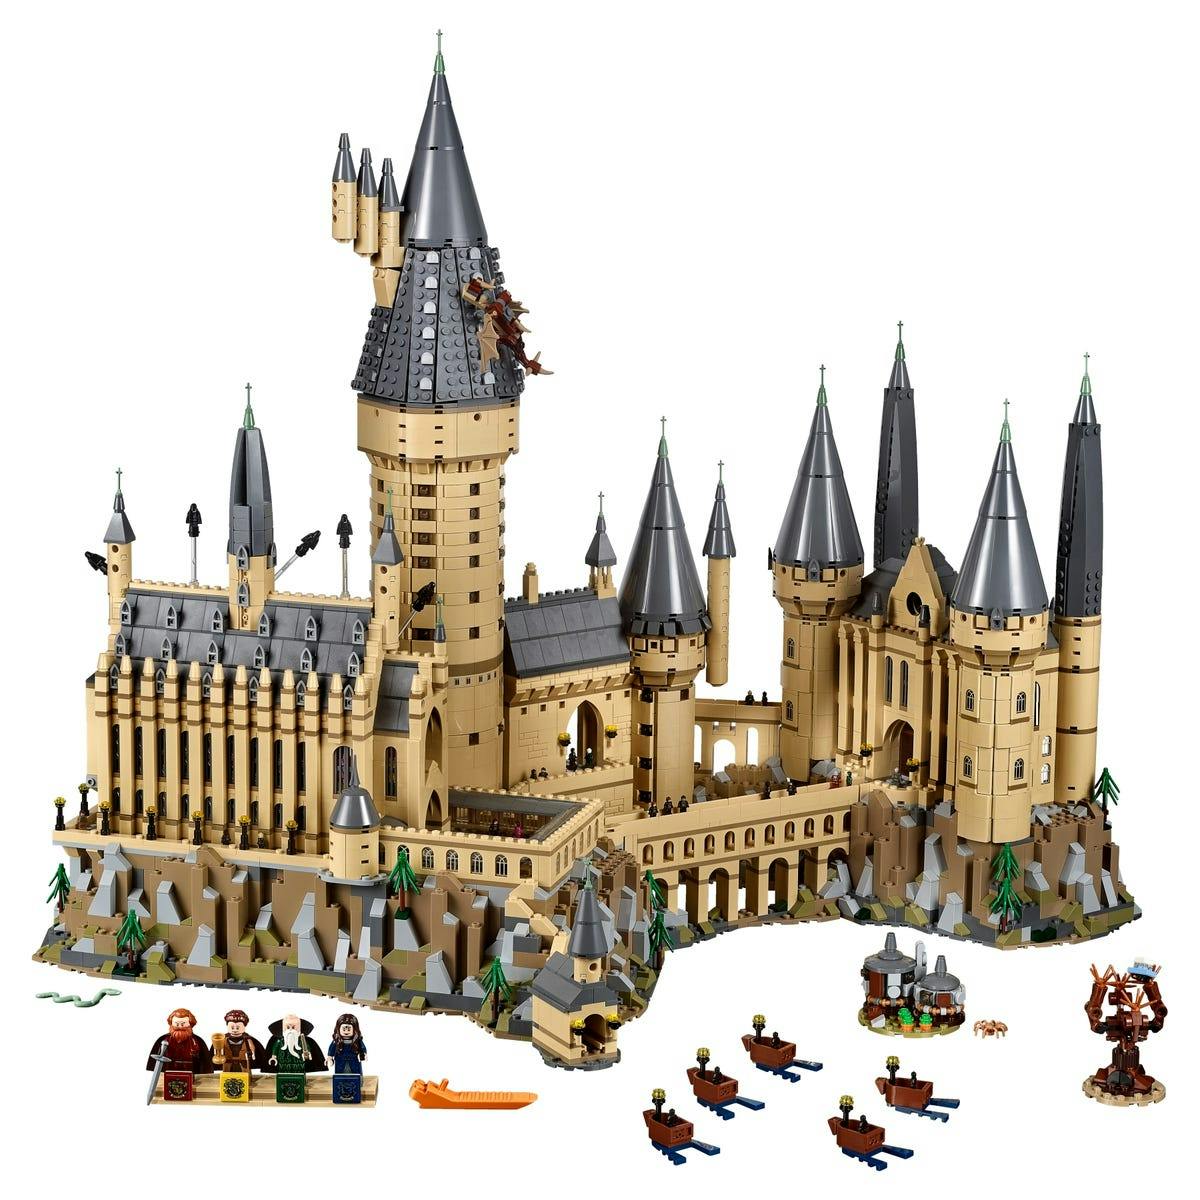 A Harry Potter themed lego set.